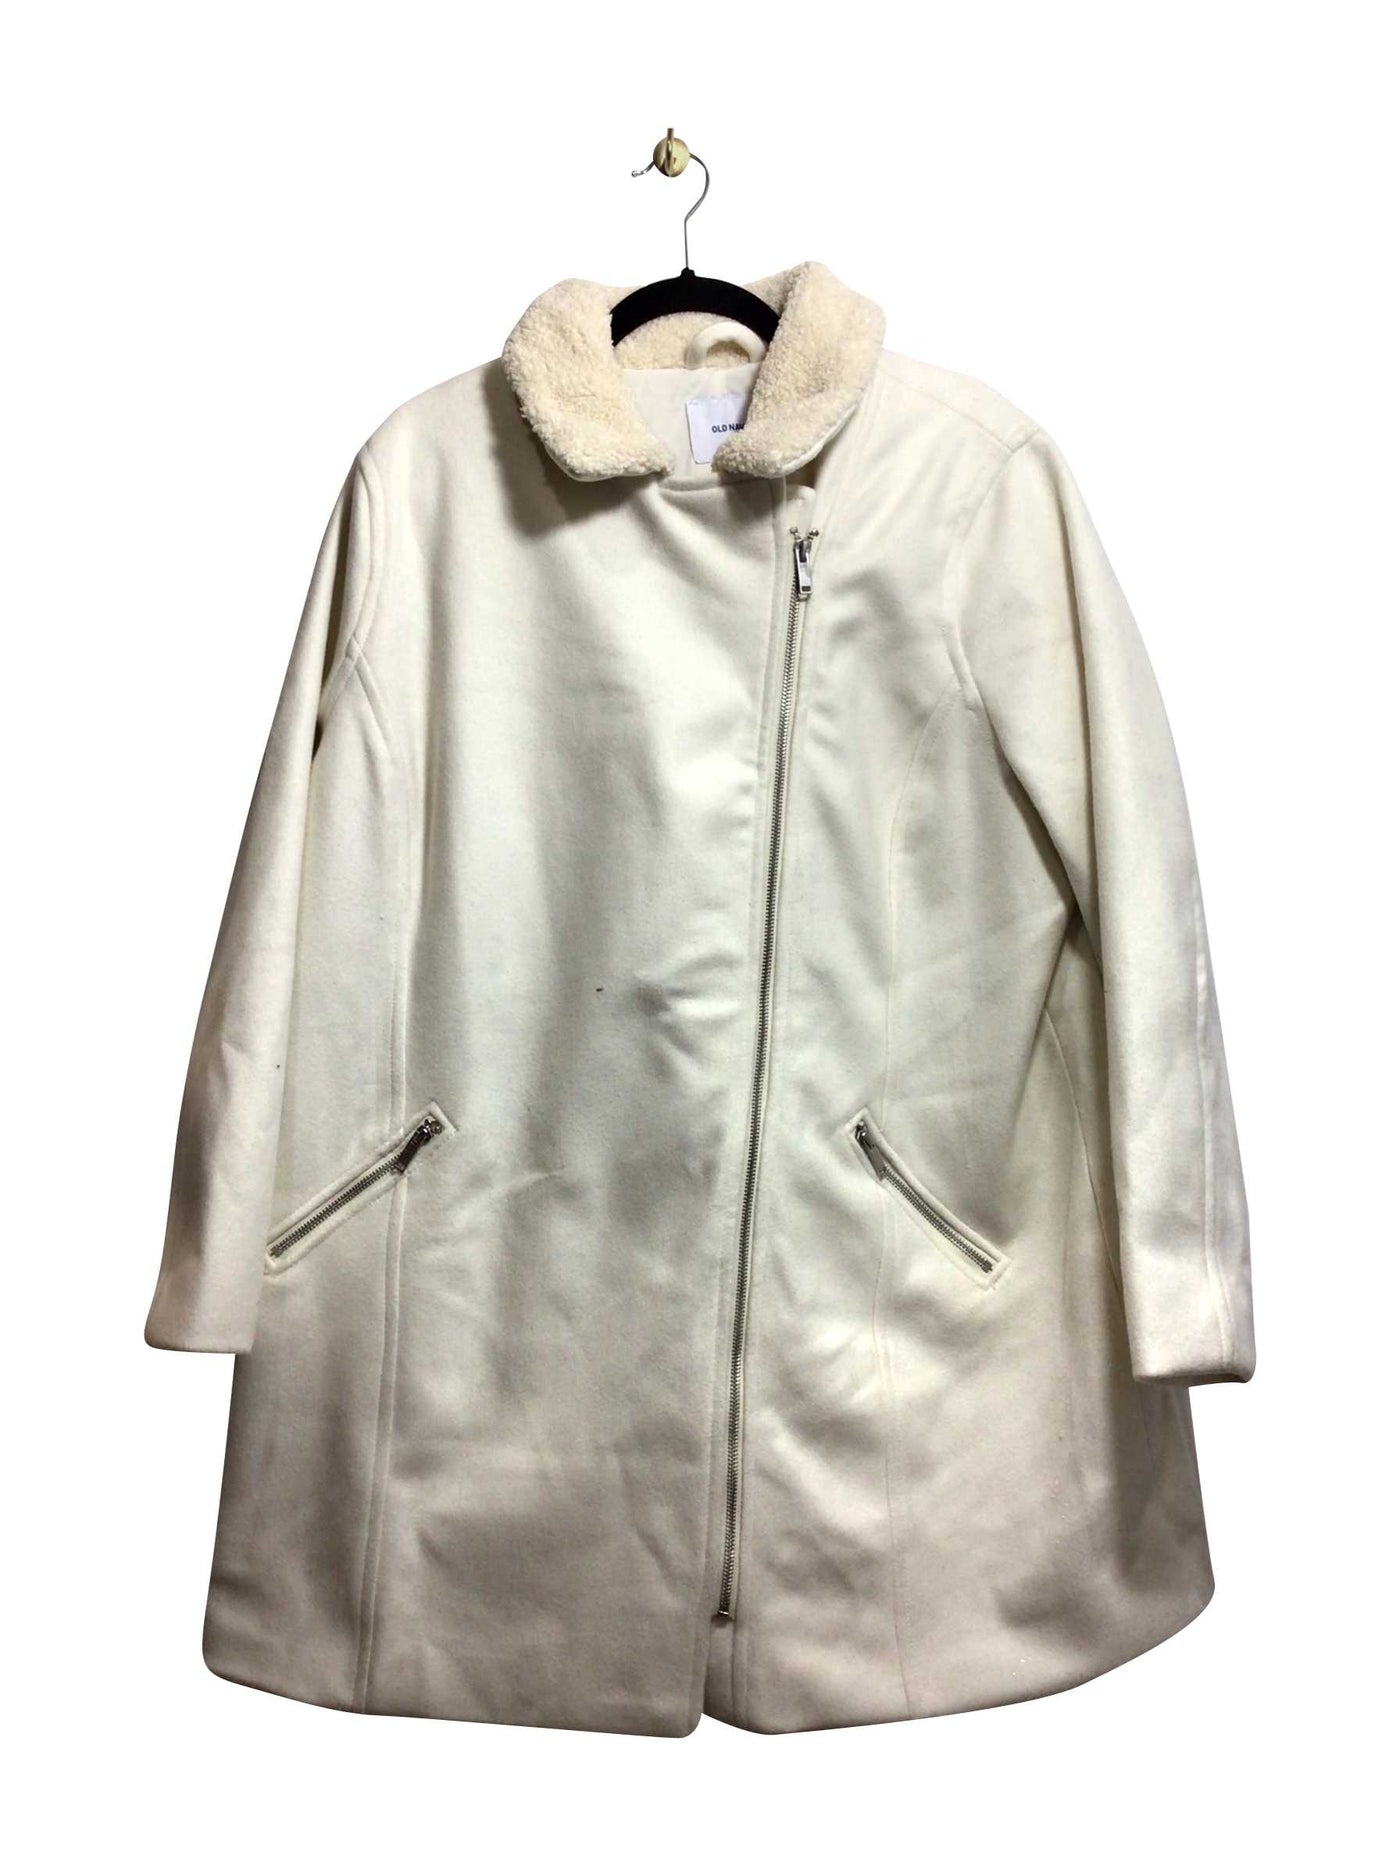 OLD NAVY Regular fit Coat in White  -  2XL  15.00 Koop